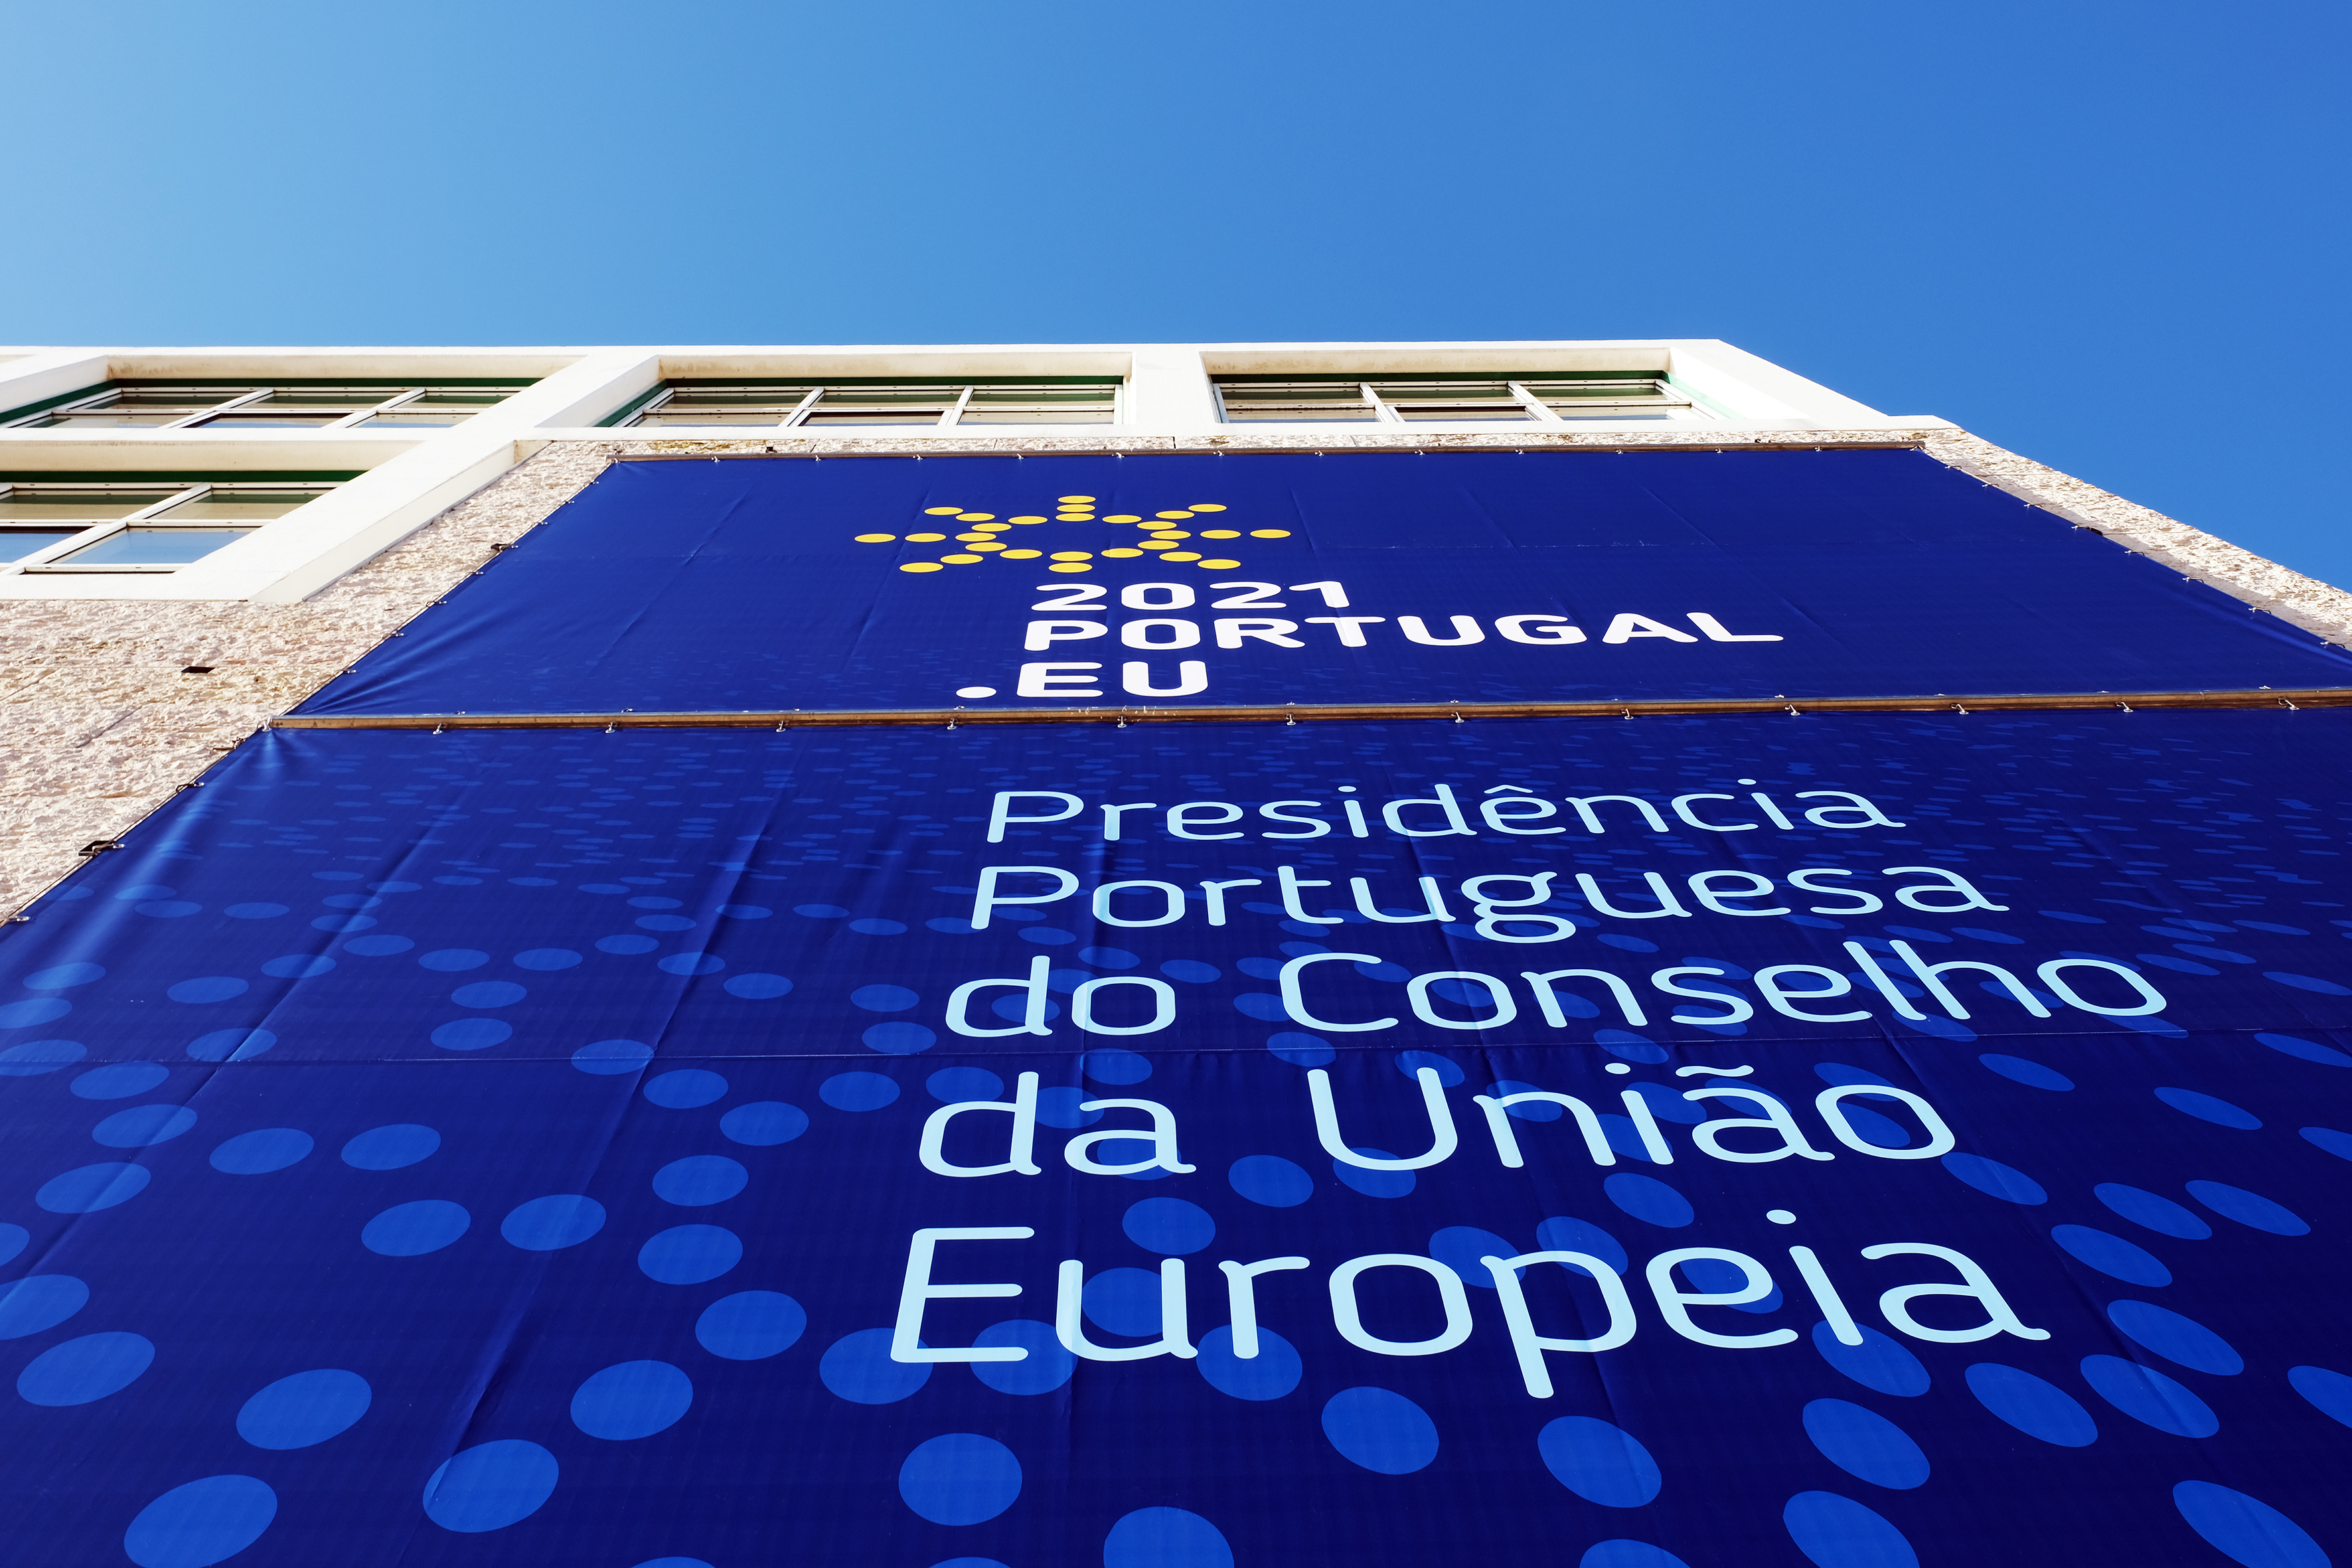 Centro Cultural de Belém gets ready to receive the Portuguese Presidency of EU Council.